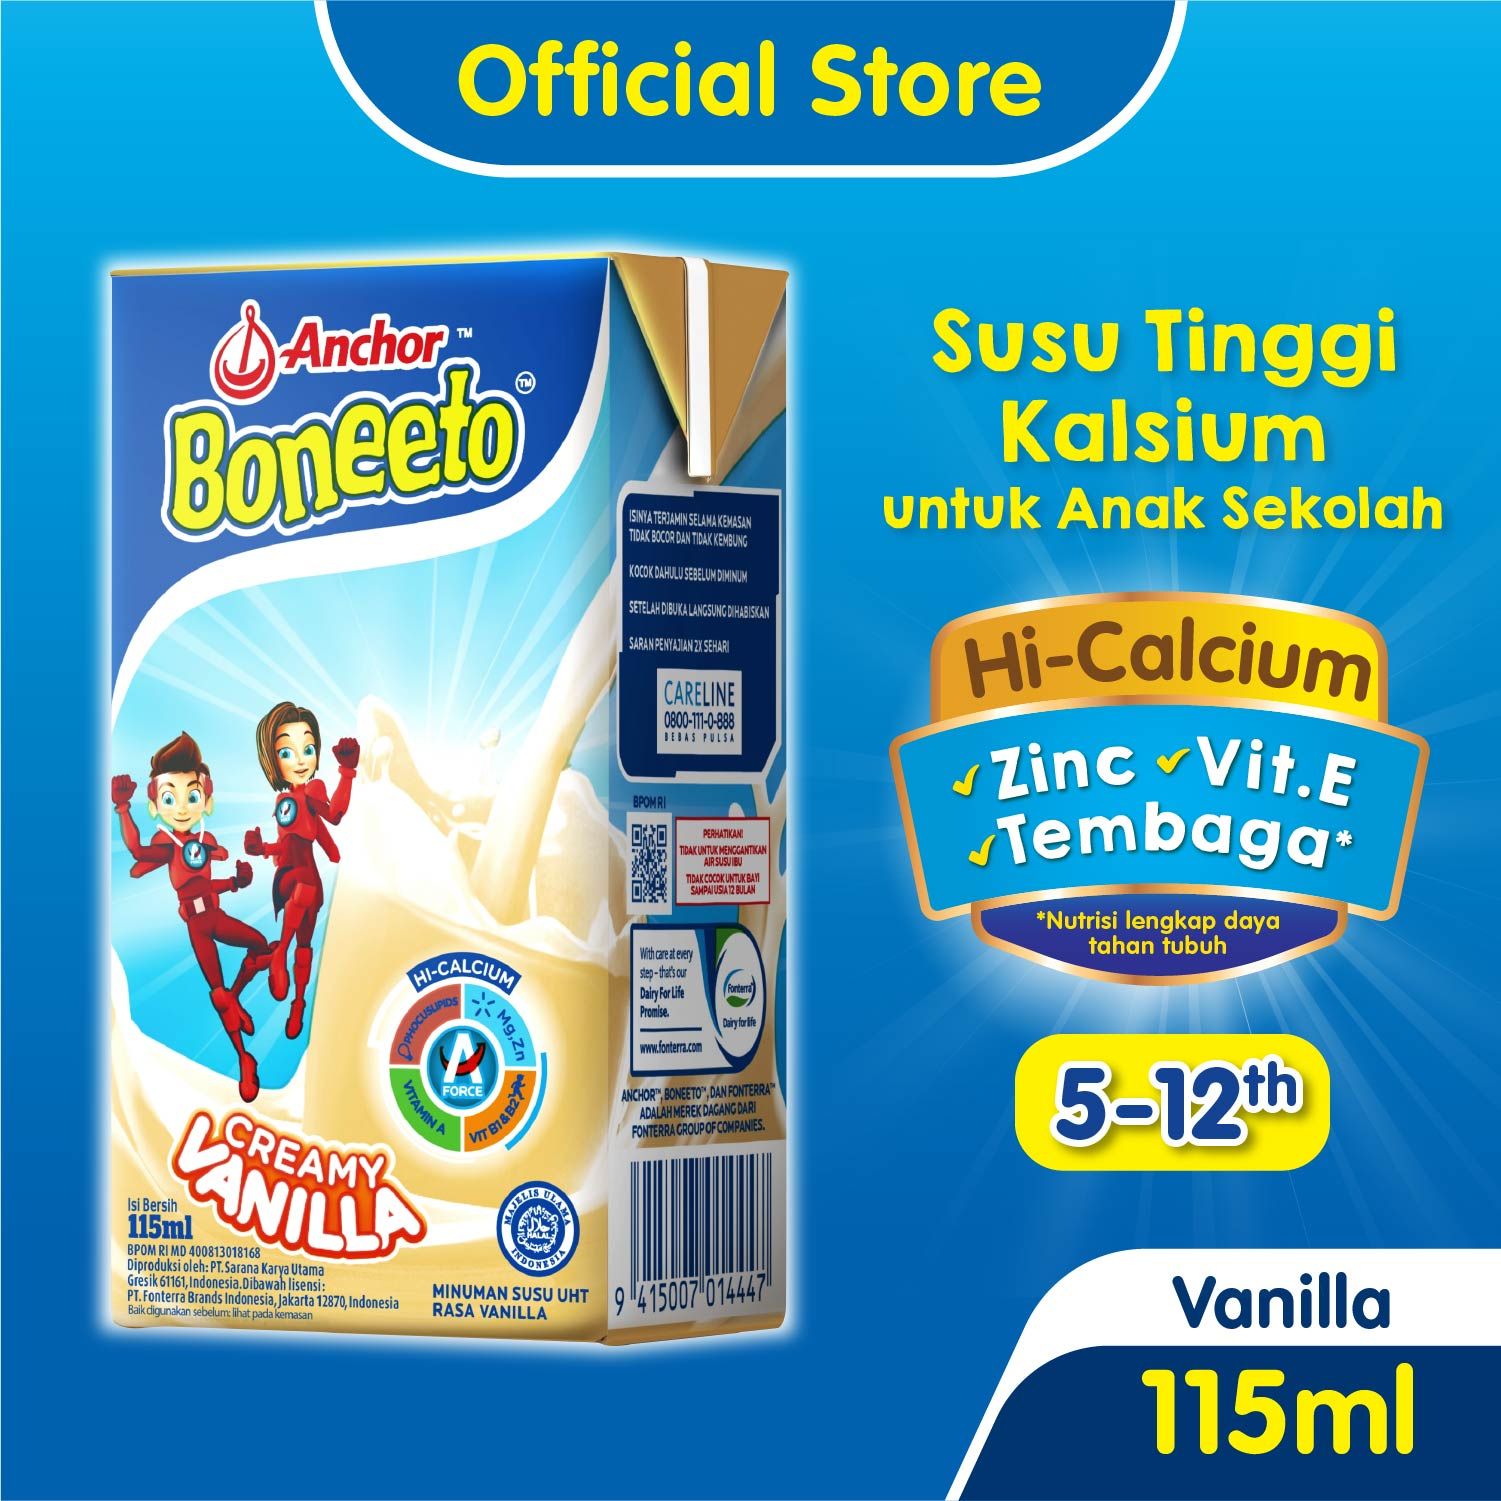 Anchor Boneeto UHT Creamy Vanilla 115ml - Susu Pertumbuhan Anak - 1